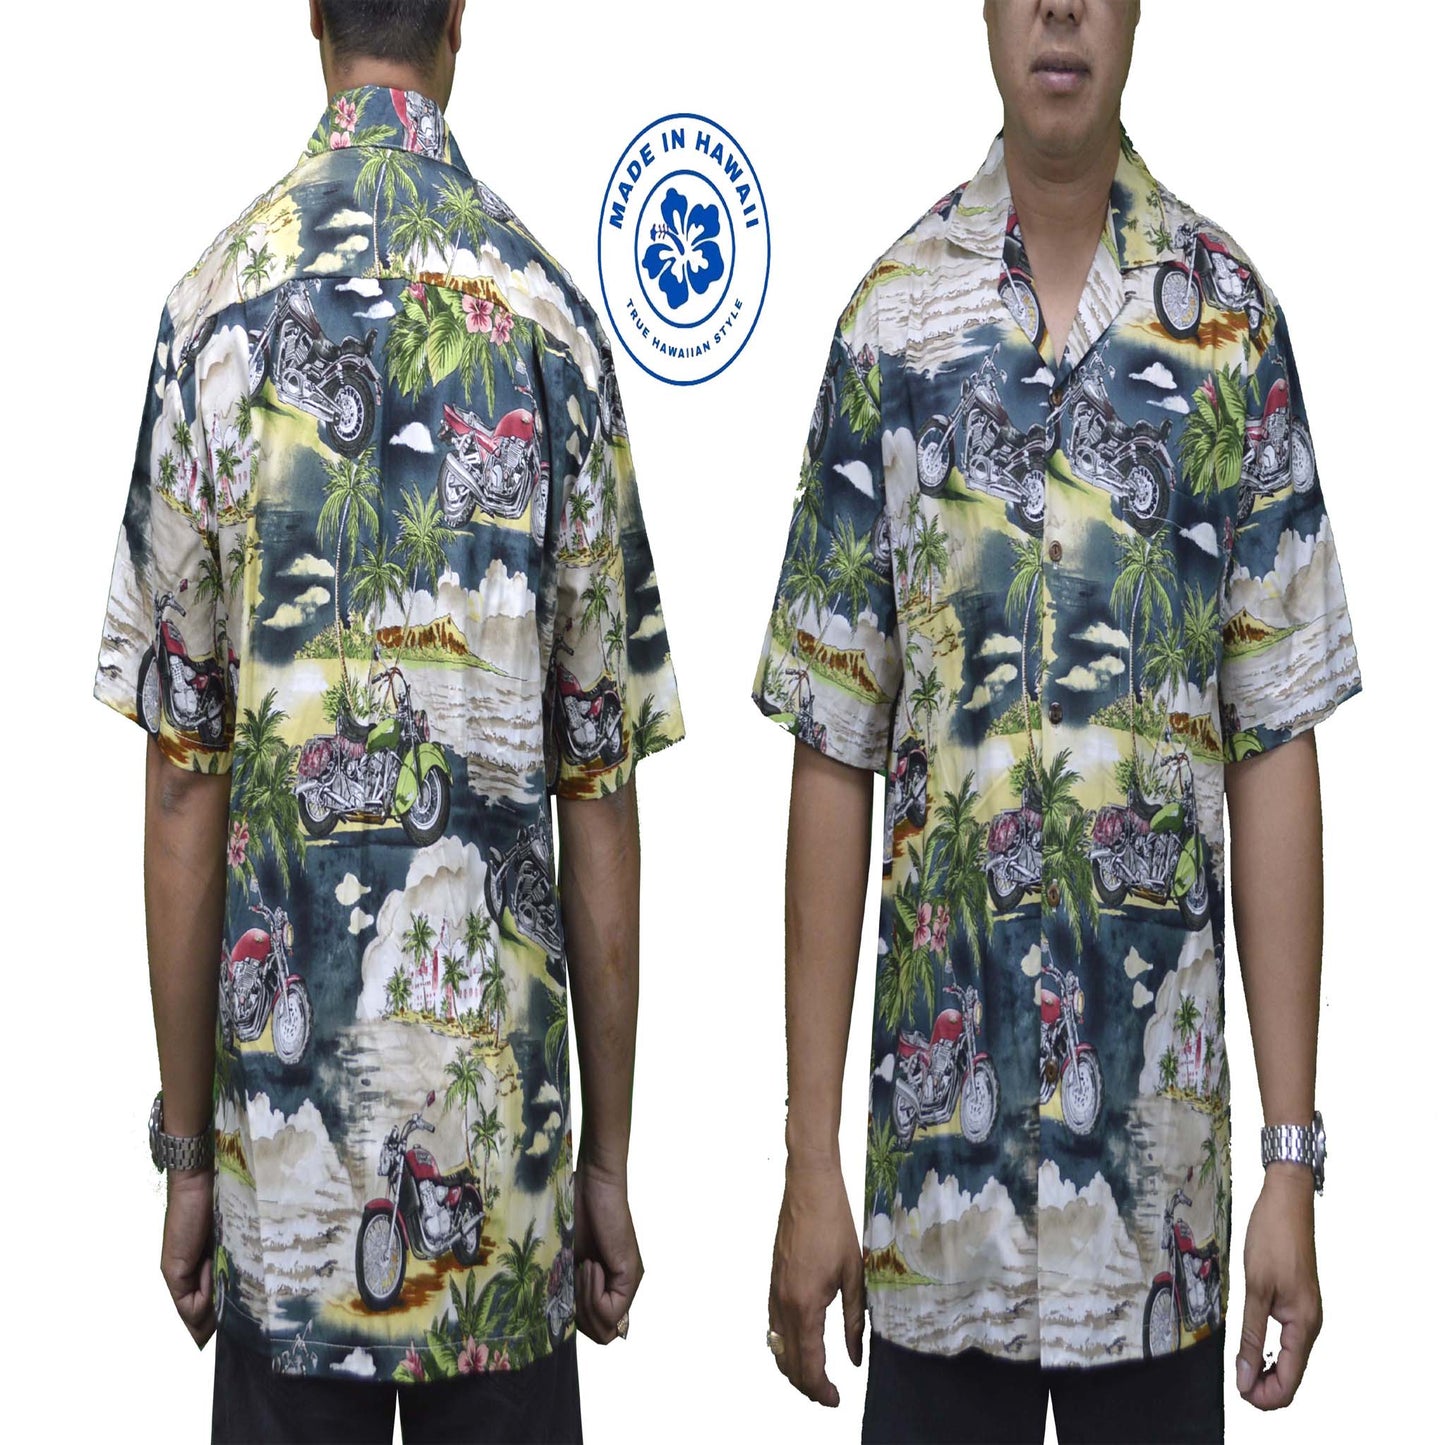 blue hawaiian cotton aloha shirt with motorcycle scene theme